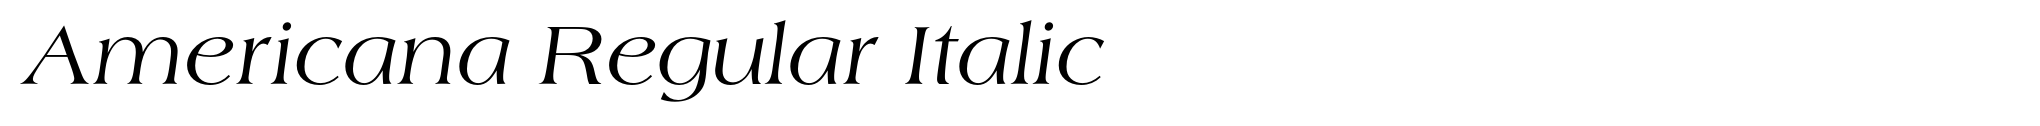 Americana Regular Italic image